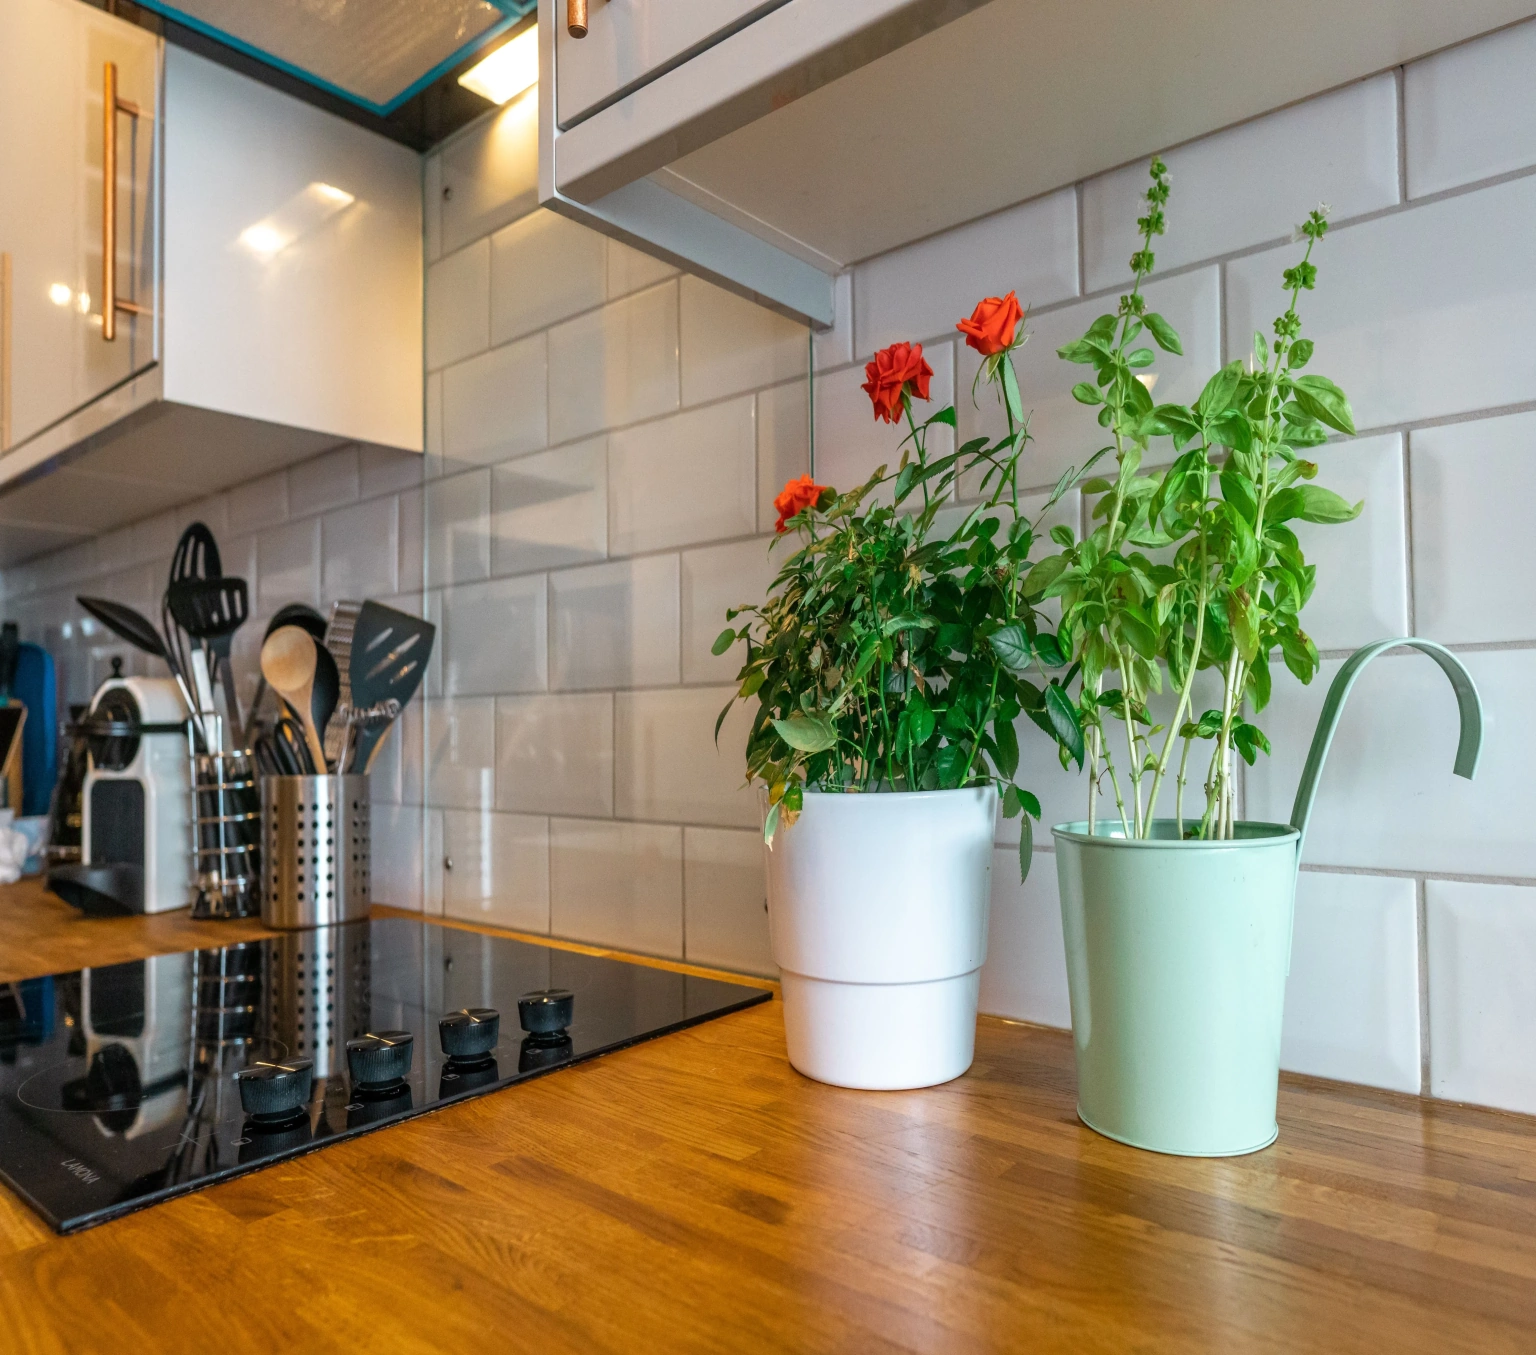 Modular kitchen with minimalist decoratives